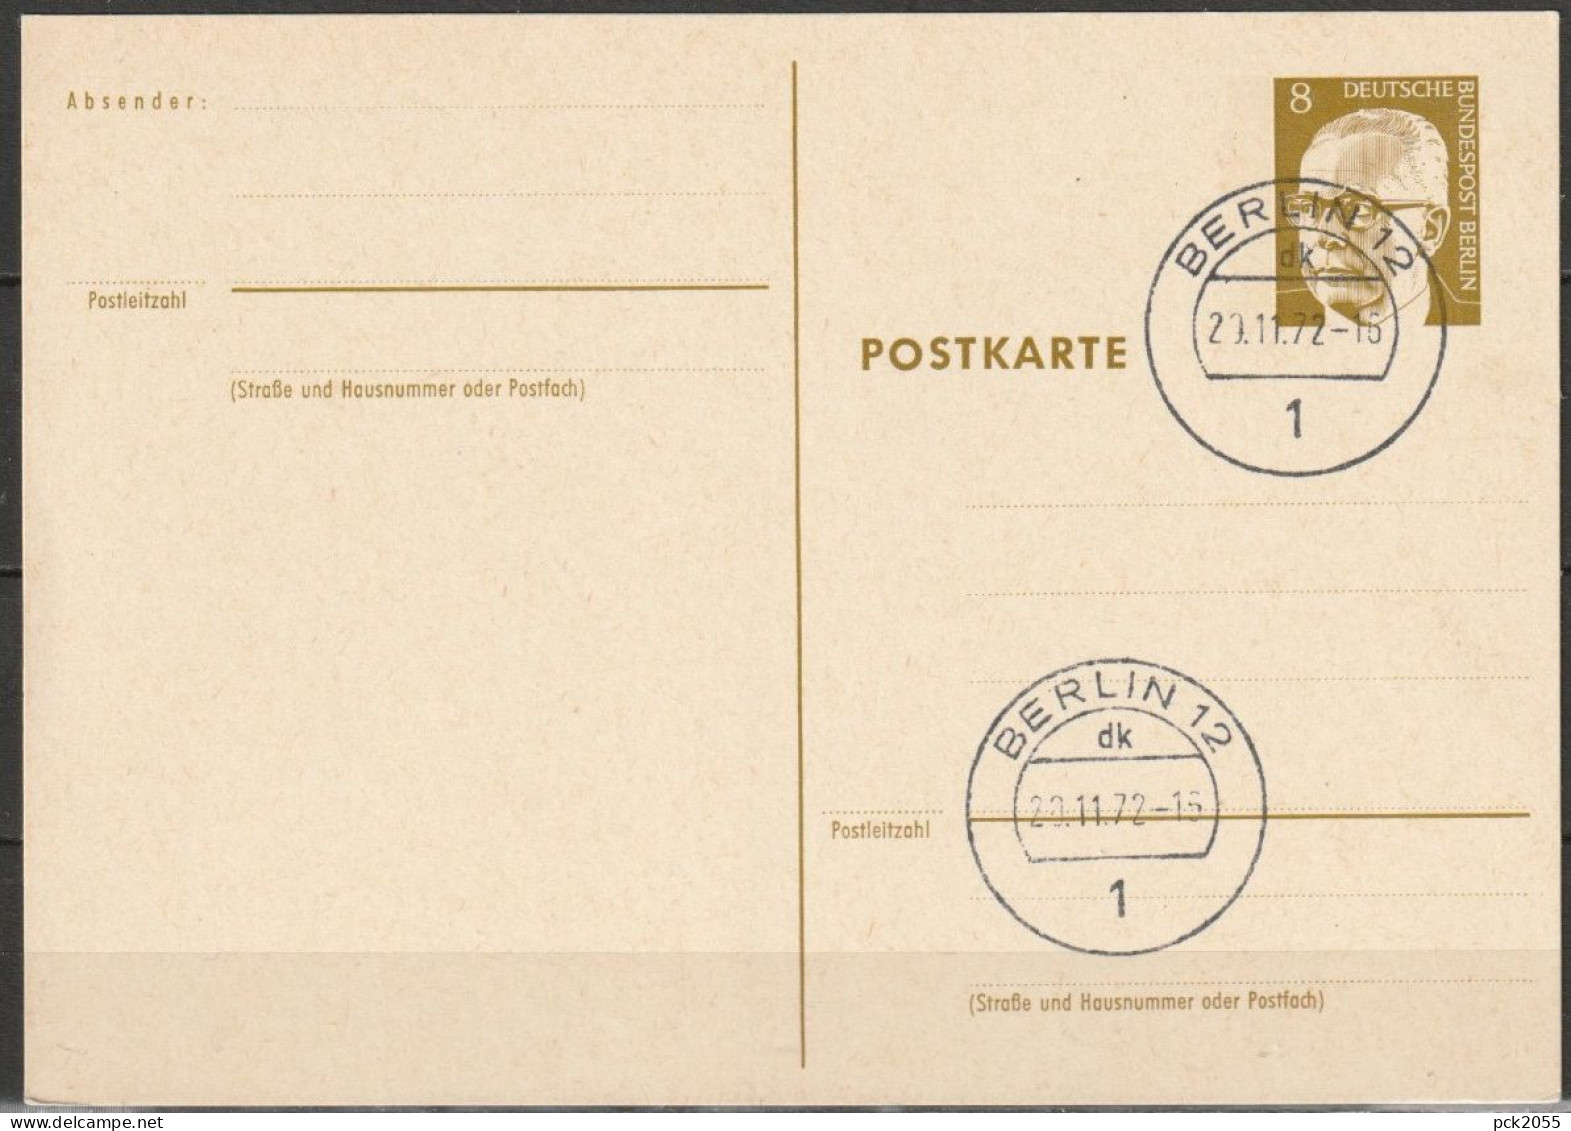 Berlin Ganzsache 1971/72 Mi.-Nr. P 80 Tagesstempel BERLIN 20.11.72  ( PK 207 ) - Cartes Postales - Oblitérées